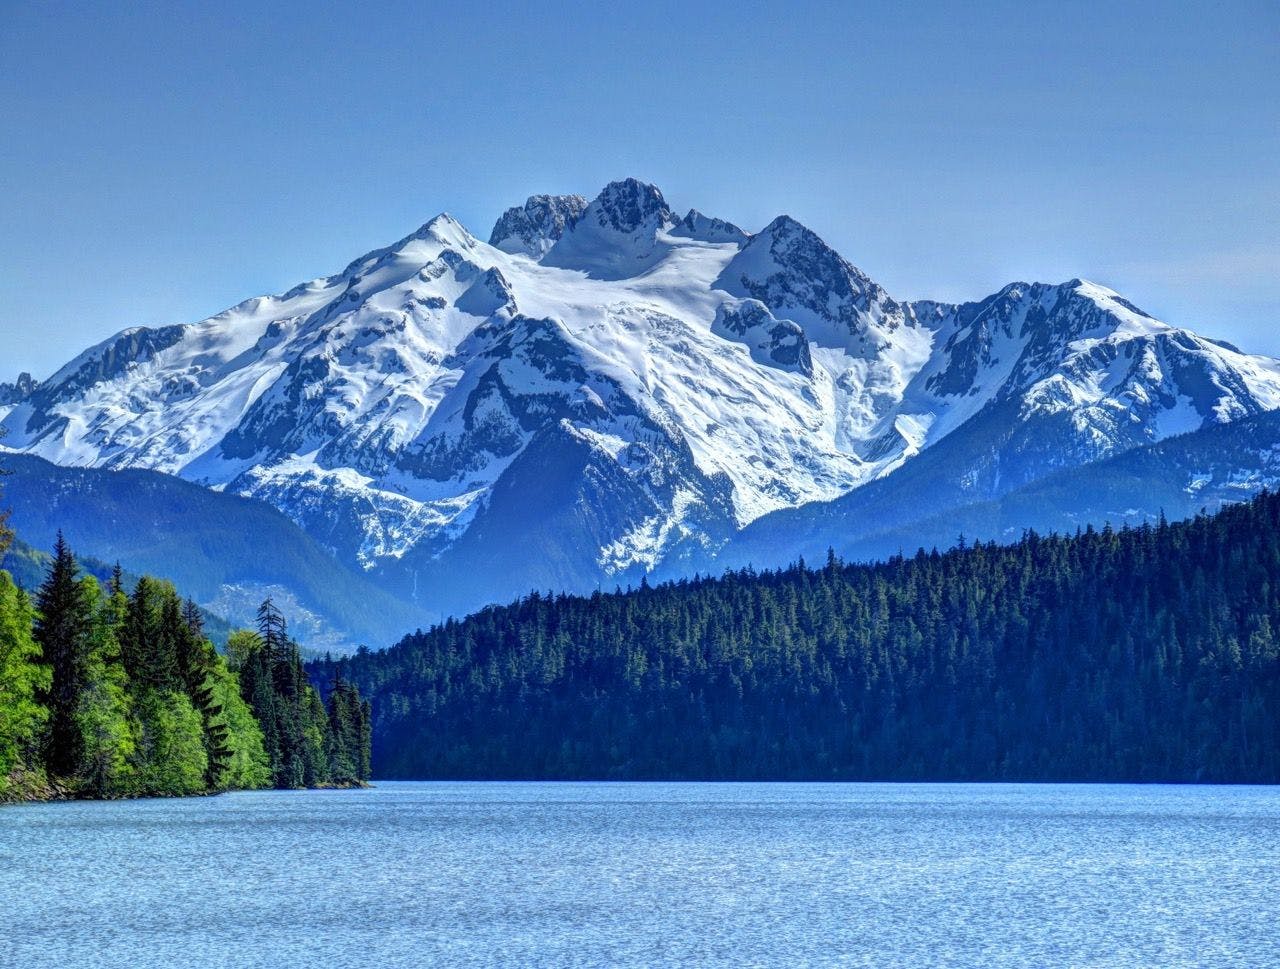 British Columbia coastline with mountains